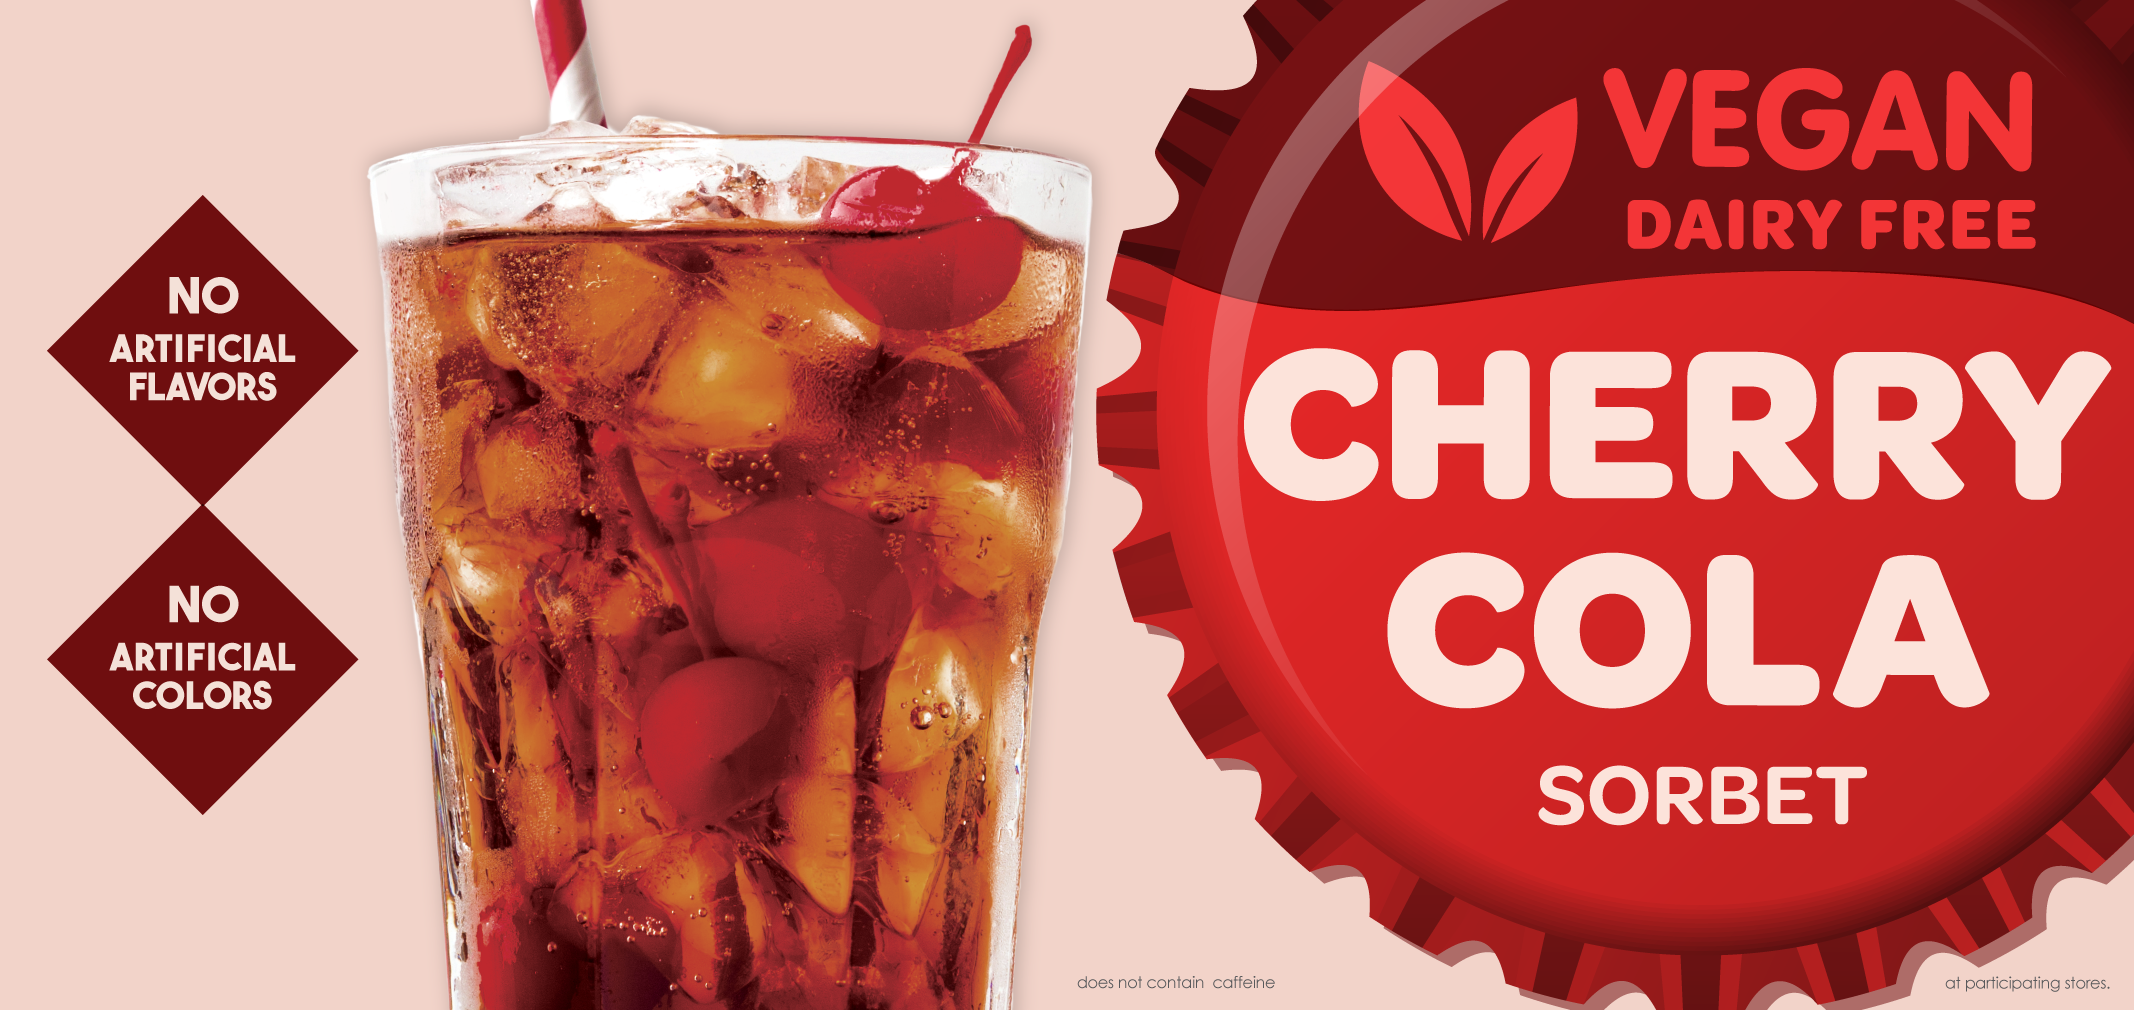 Vegan Cherry Cola Sorbet label image